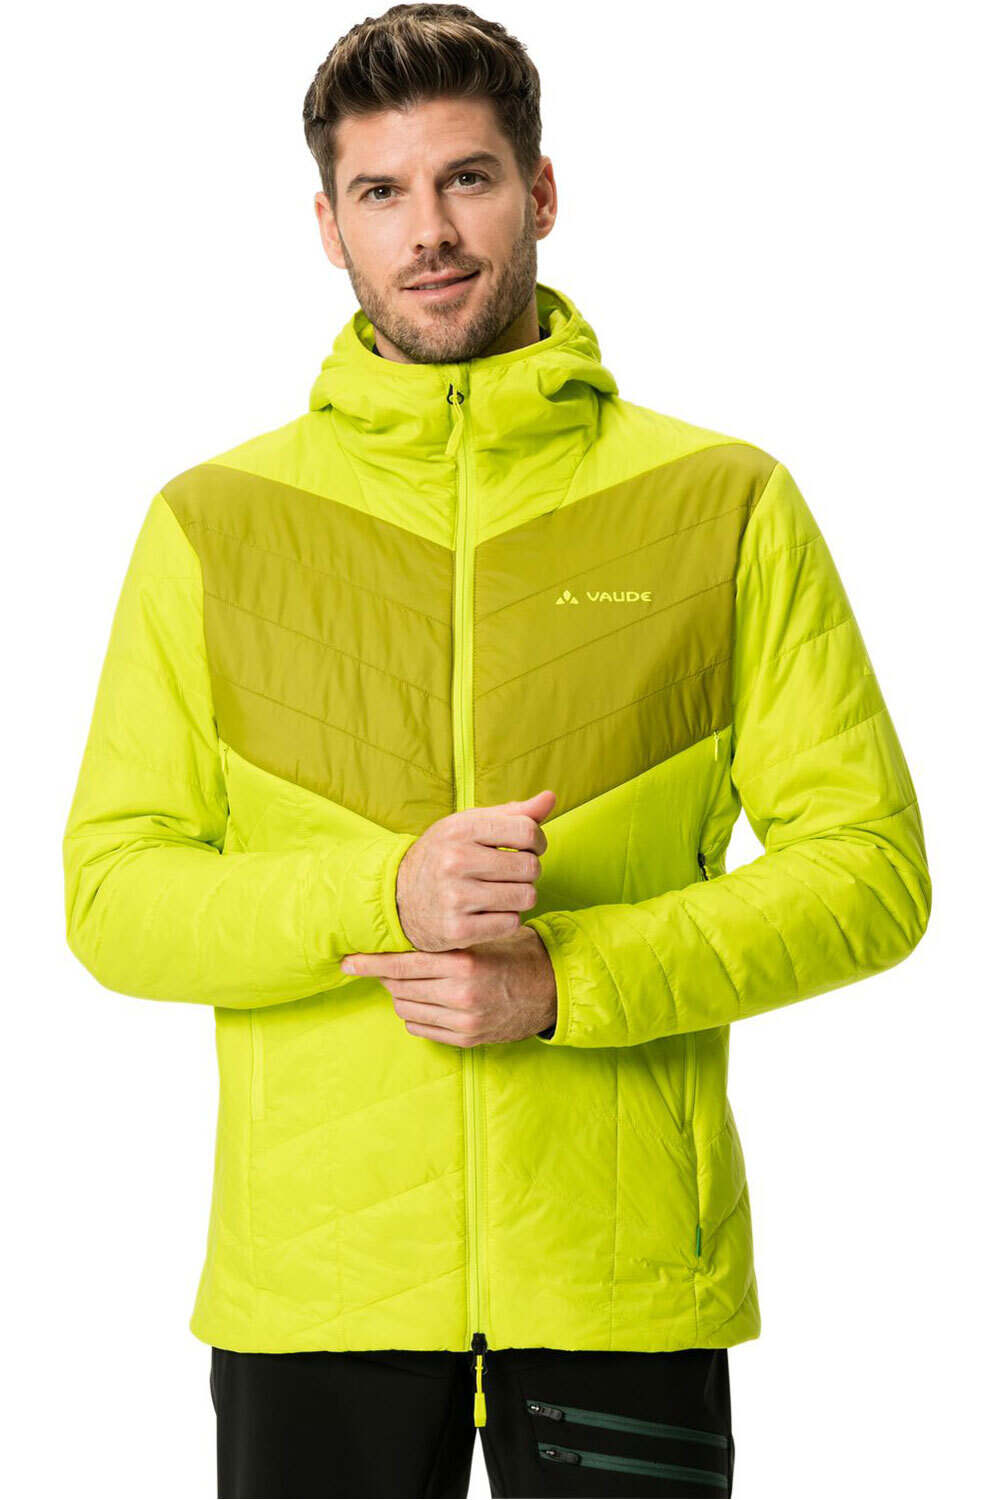 Vaude chaqueta outdoor hombre Men's Monviso Insulation Jacket vista frontal